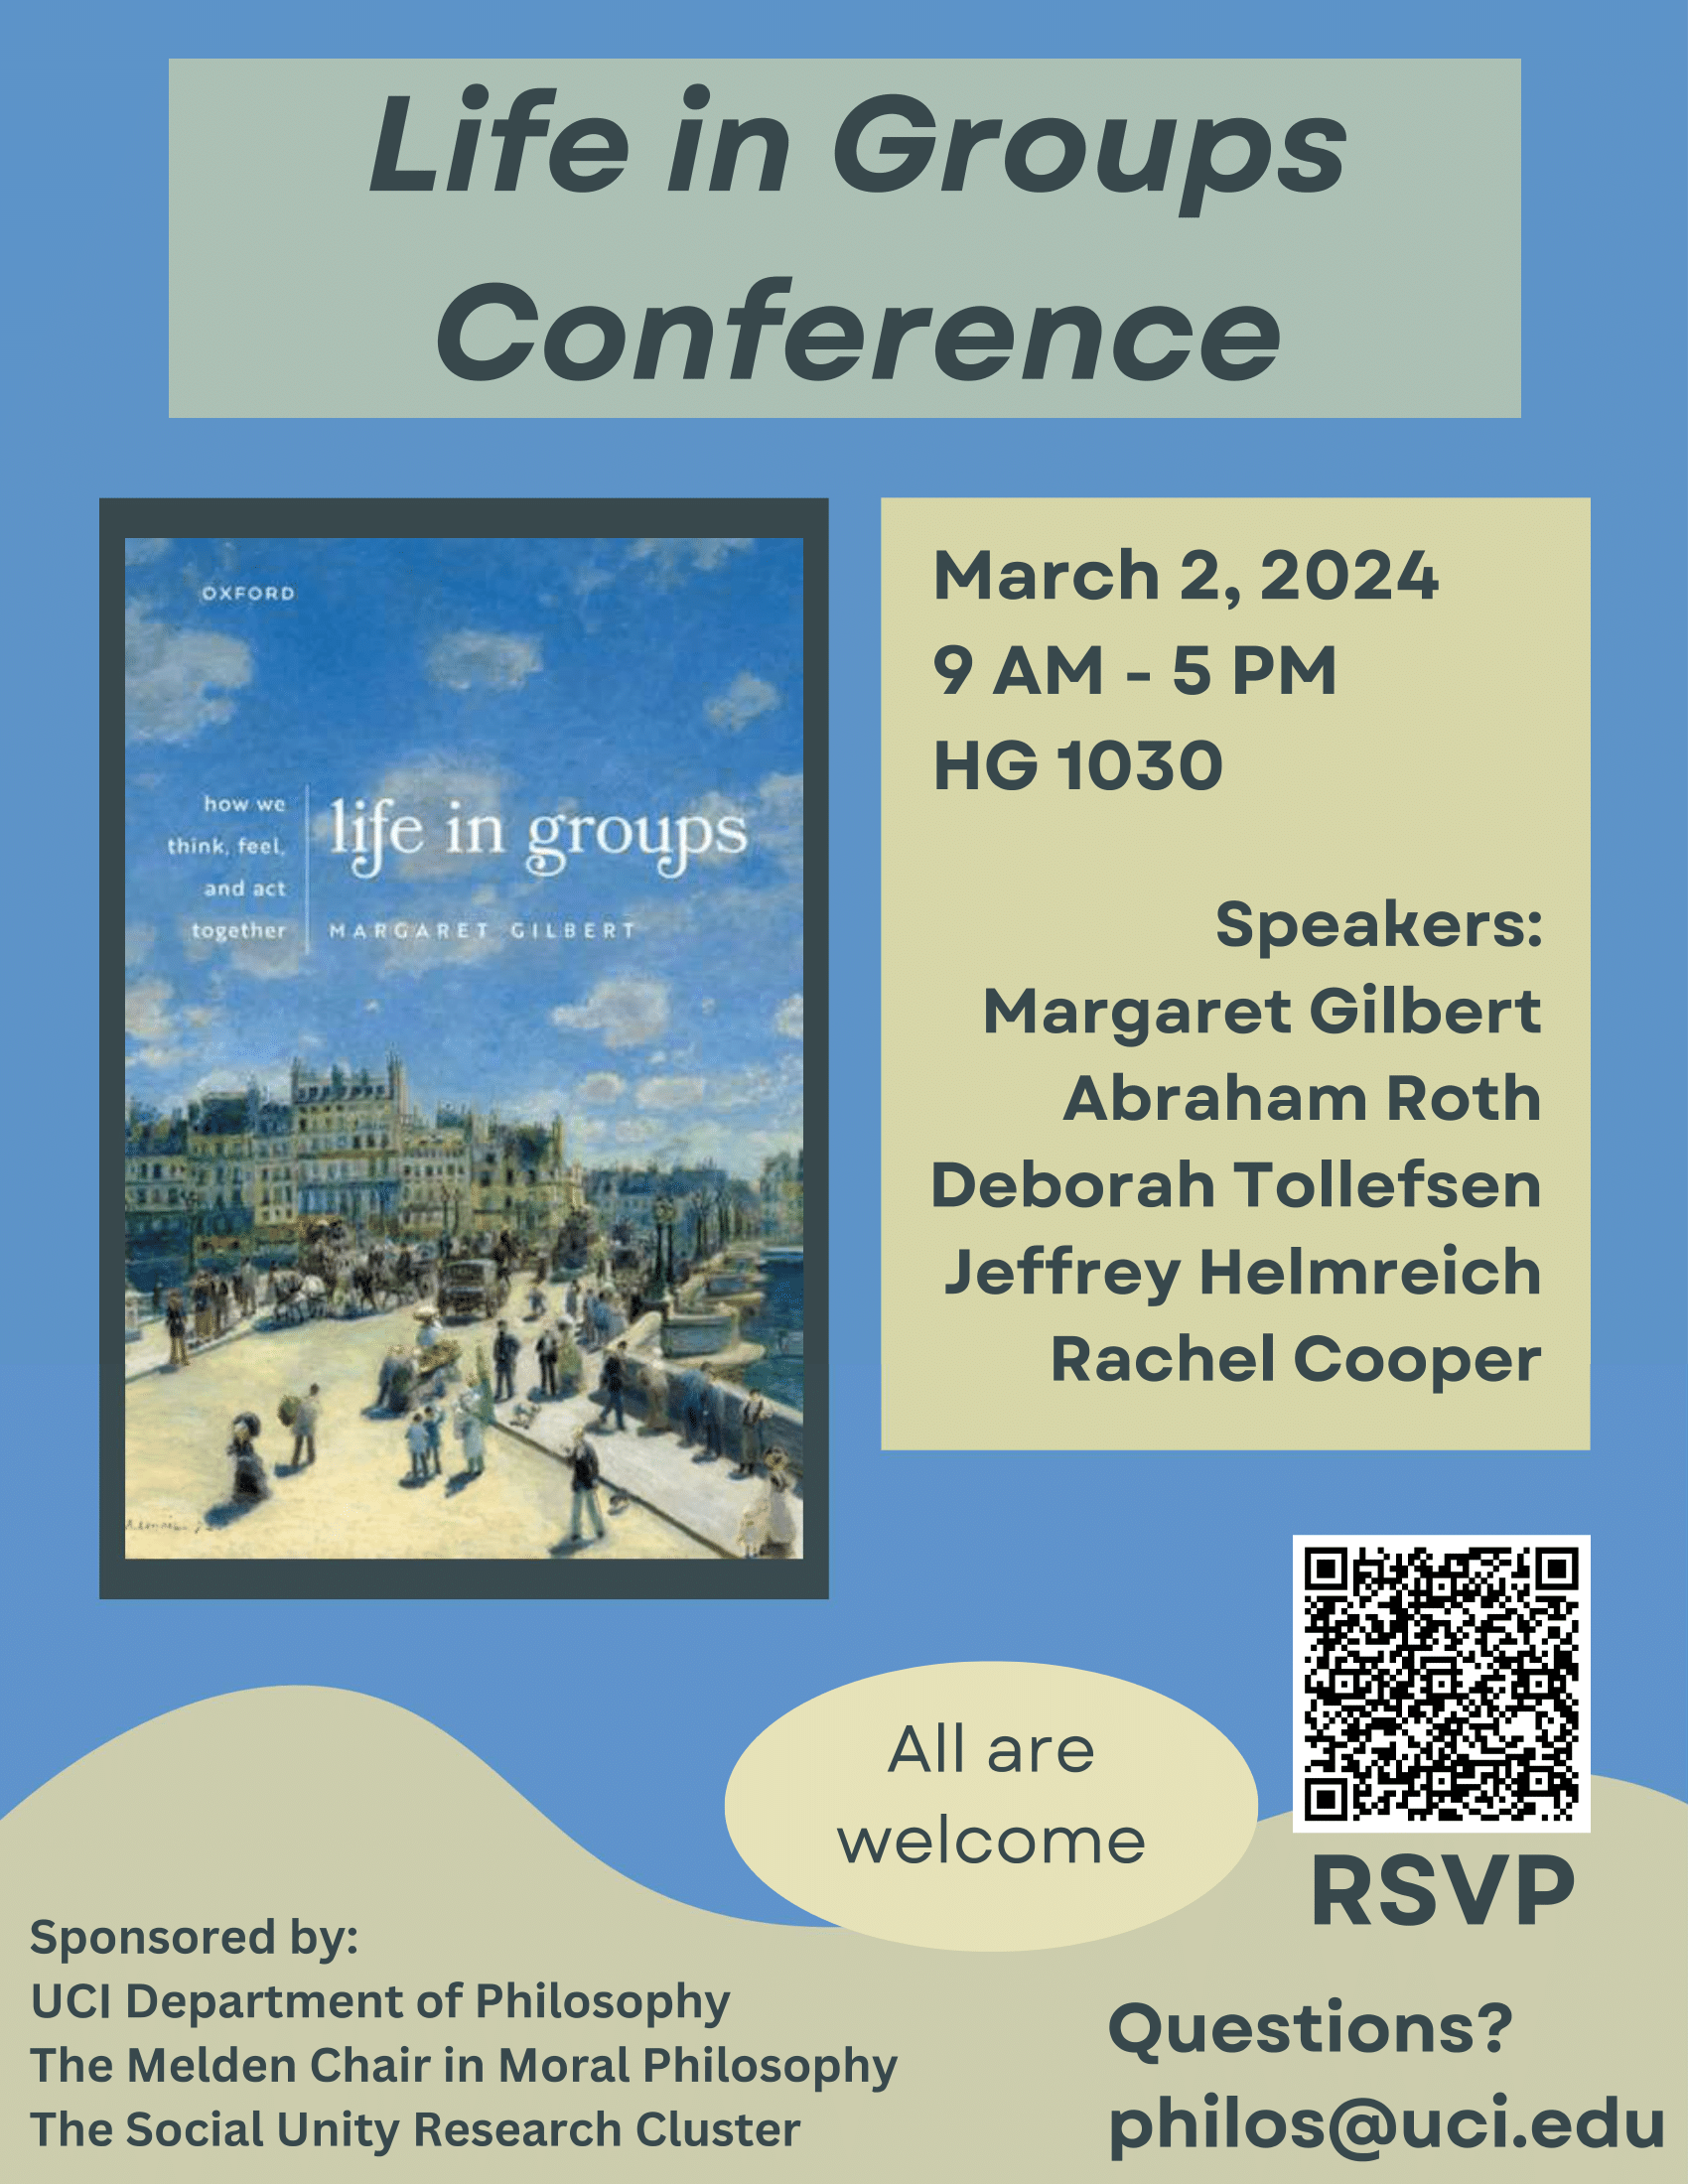 Life in Groups Conference March 2, 2024 9AM - 5PM HG 1030 on the UCI Campus Speakers: Margaret Gilbert Abraham Roth Deborah Tollefsen Jeffrey Helmreich Rachel Cooper